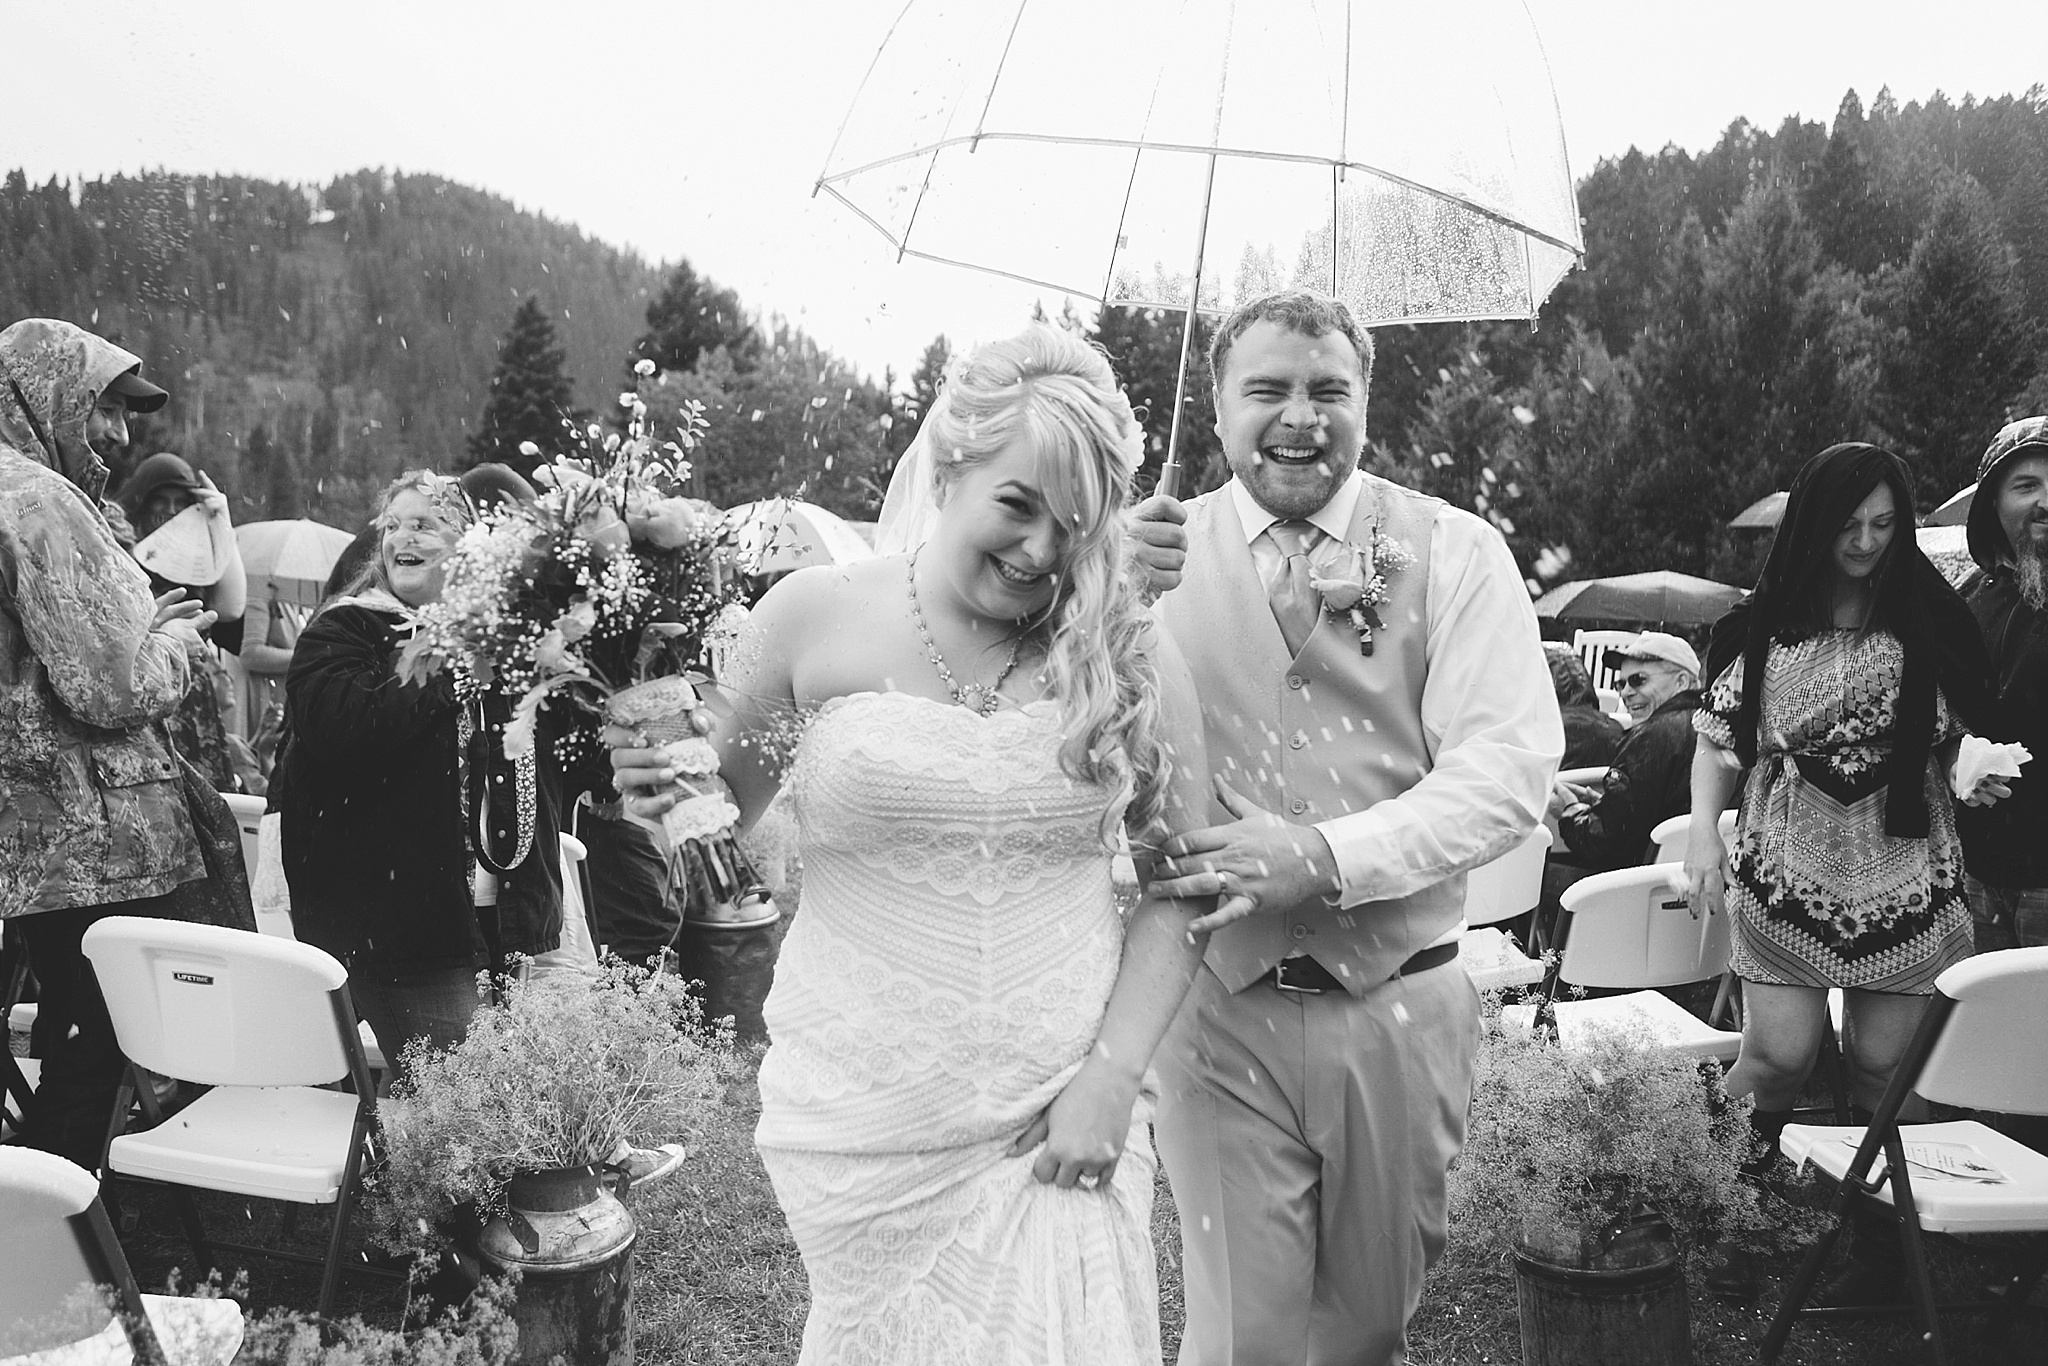 Arrowpeak Lodge Great Falls MT Wedding Photos Bride and Groom at Ceremony in Rain